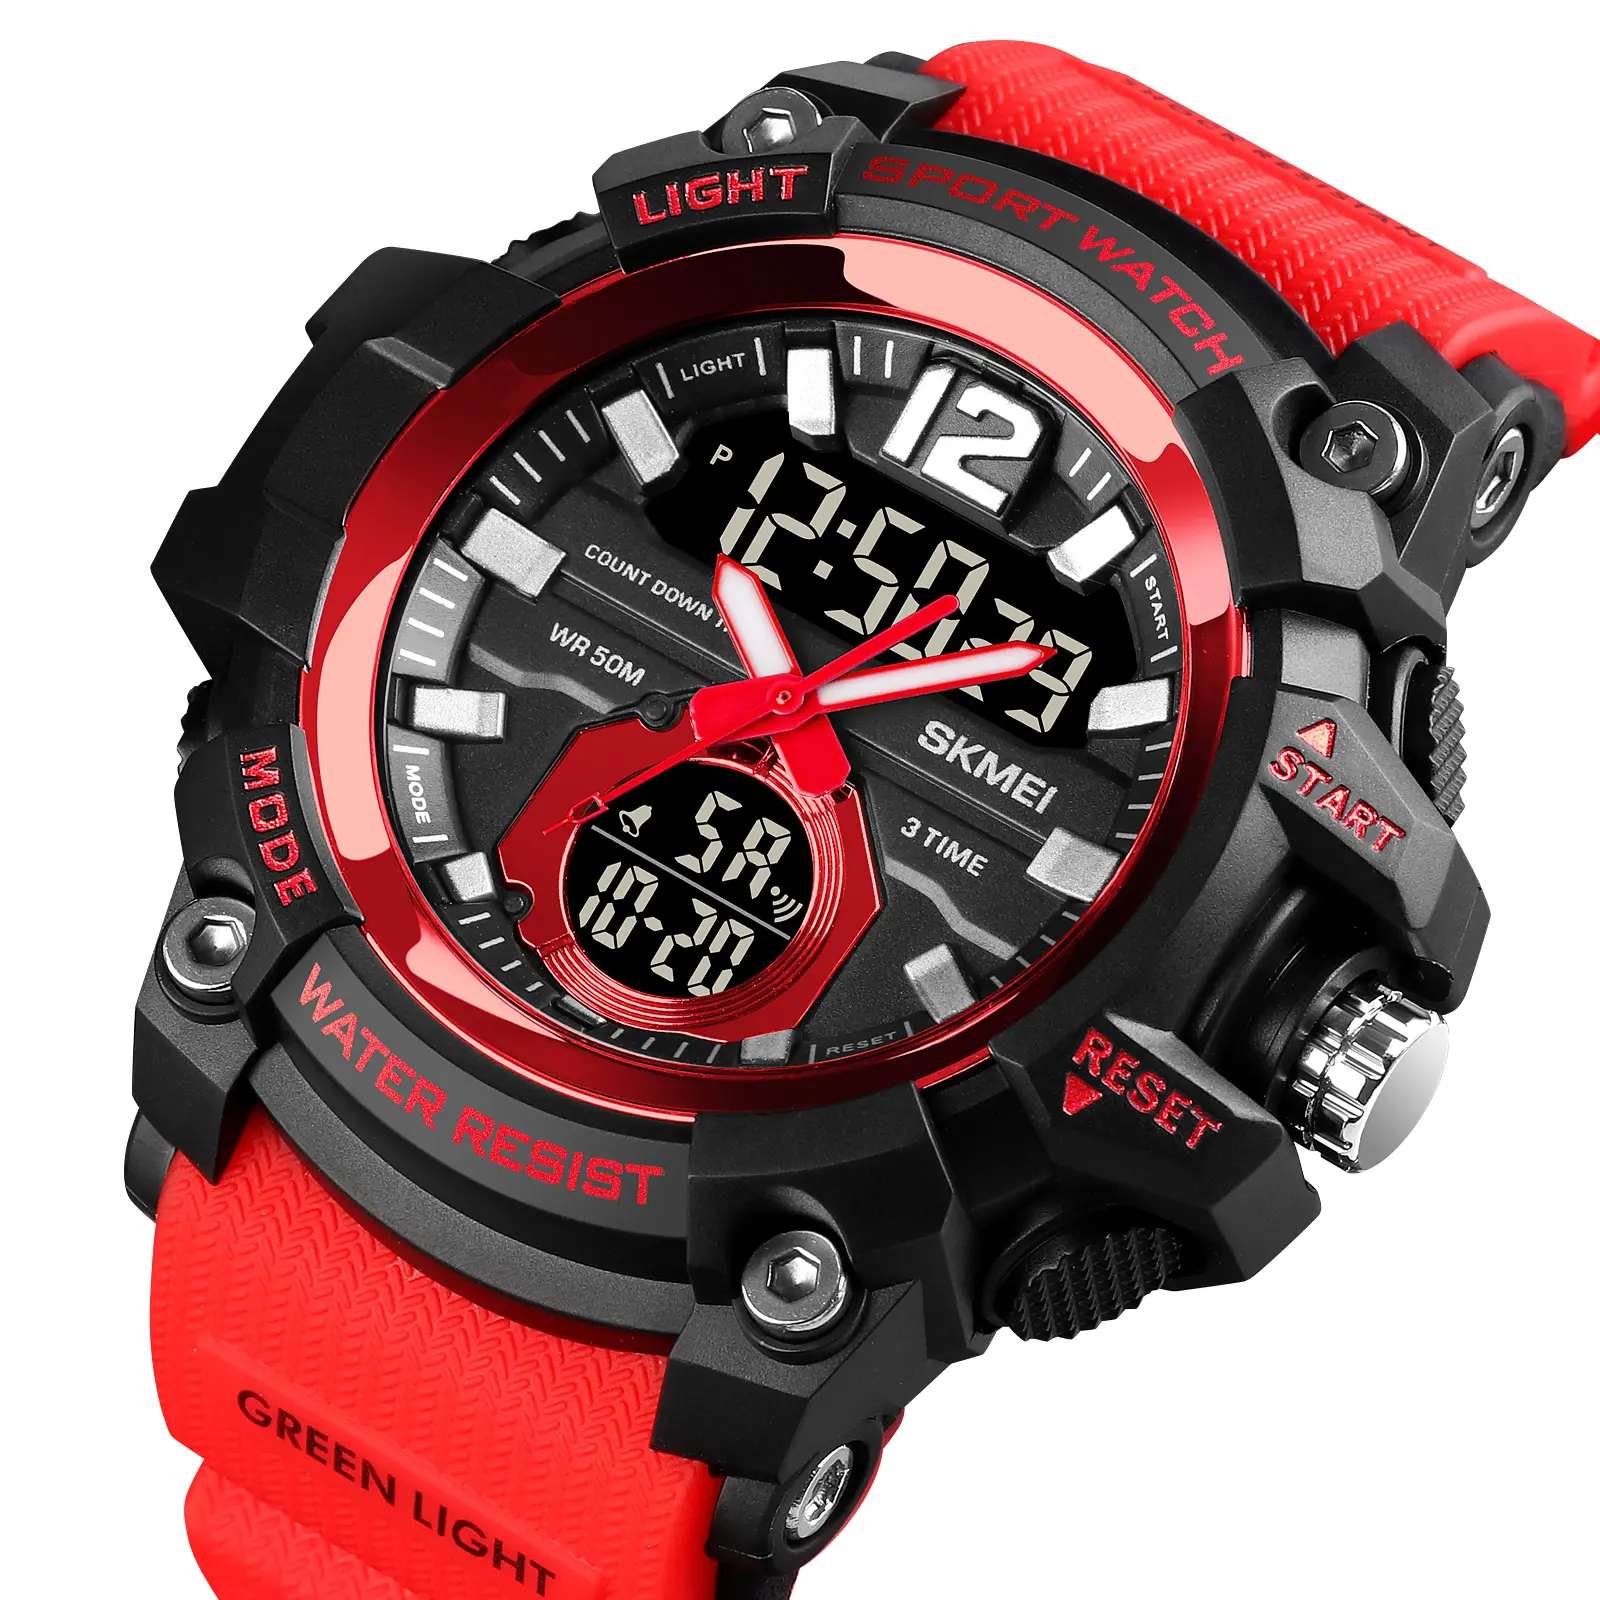 Custom and Wholesale Watches China Factory SKMEI 1725 Sport Men Watch Waterproof Digital Analog Watch